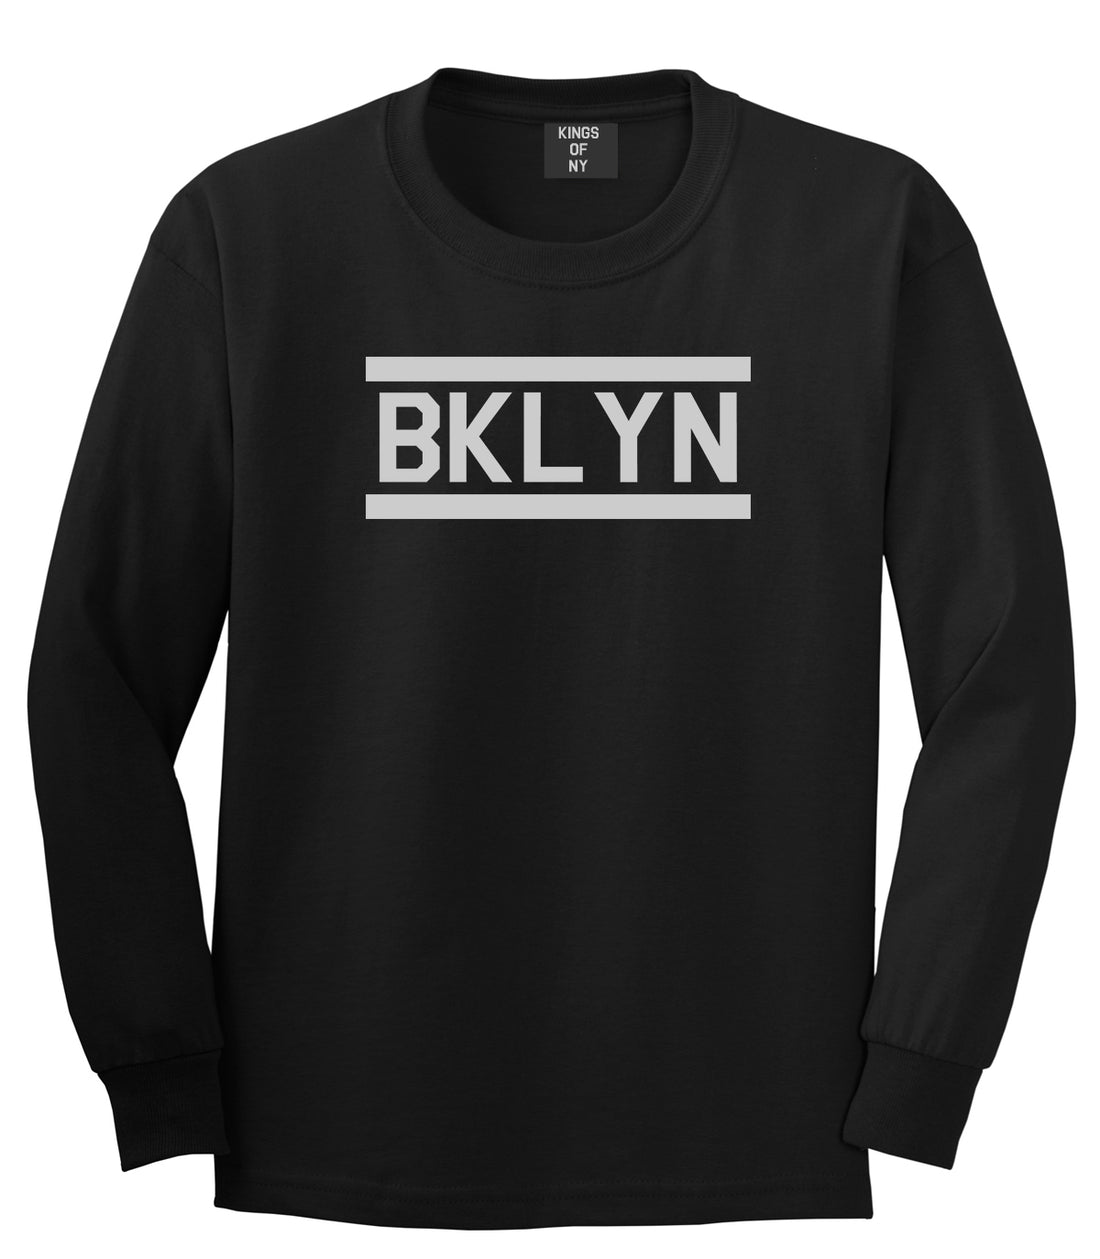 BKLYN Brooklyn Mens Long Sleeve T-Shirt Black by Kings Of NY